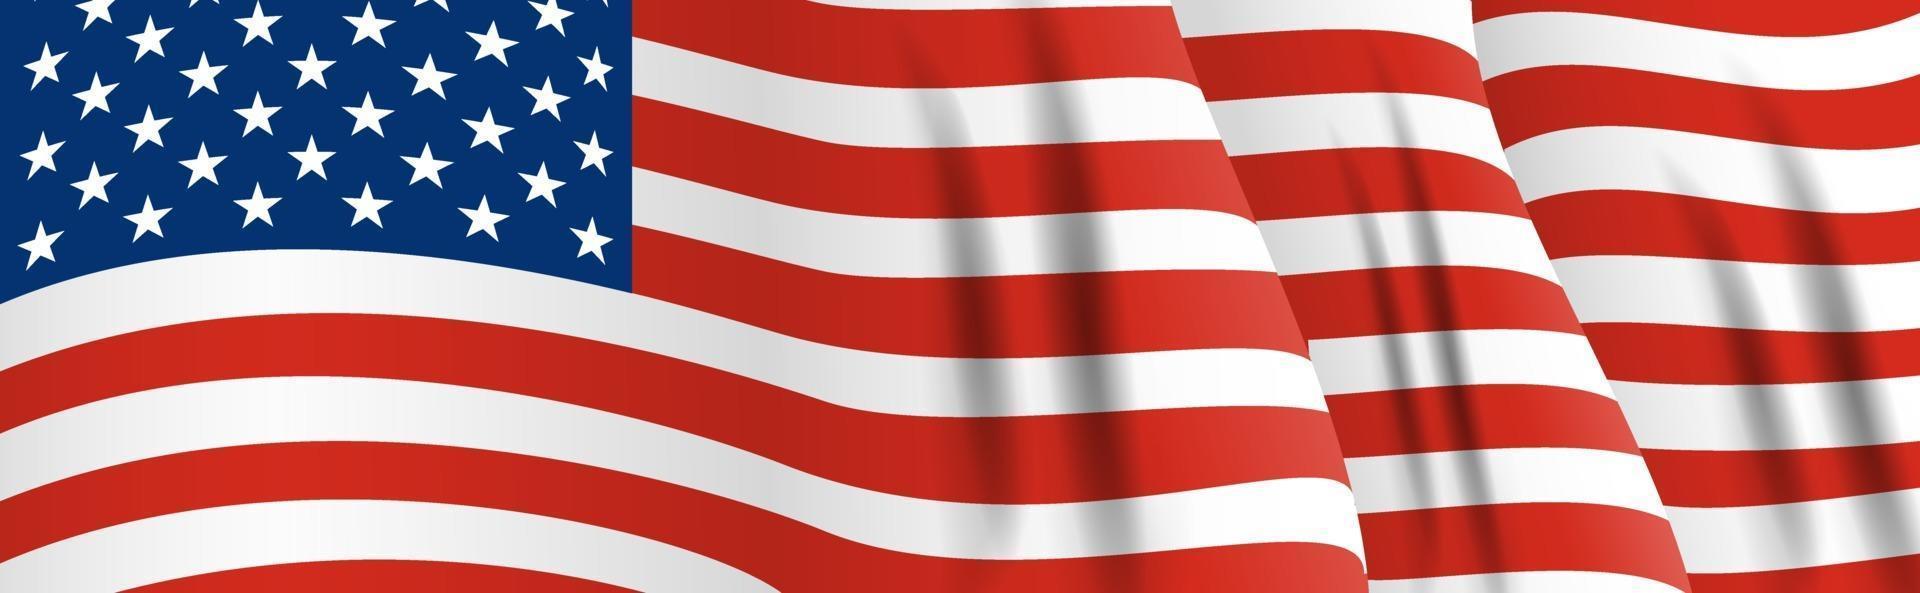 bandeira nacional da américa. acenando a bandeira dos EUA close-up. vetor